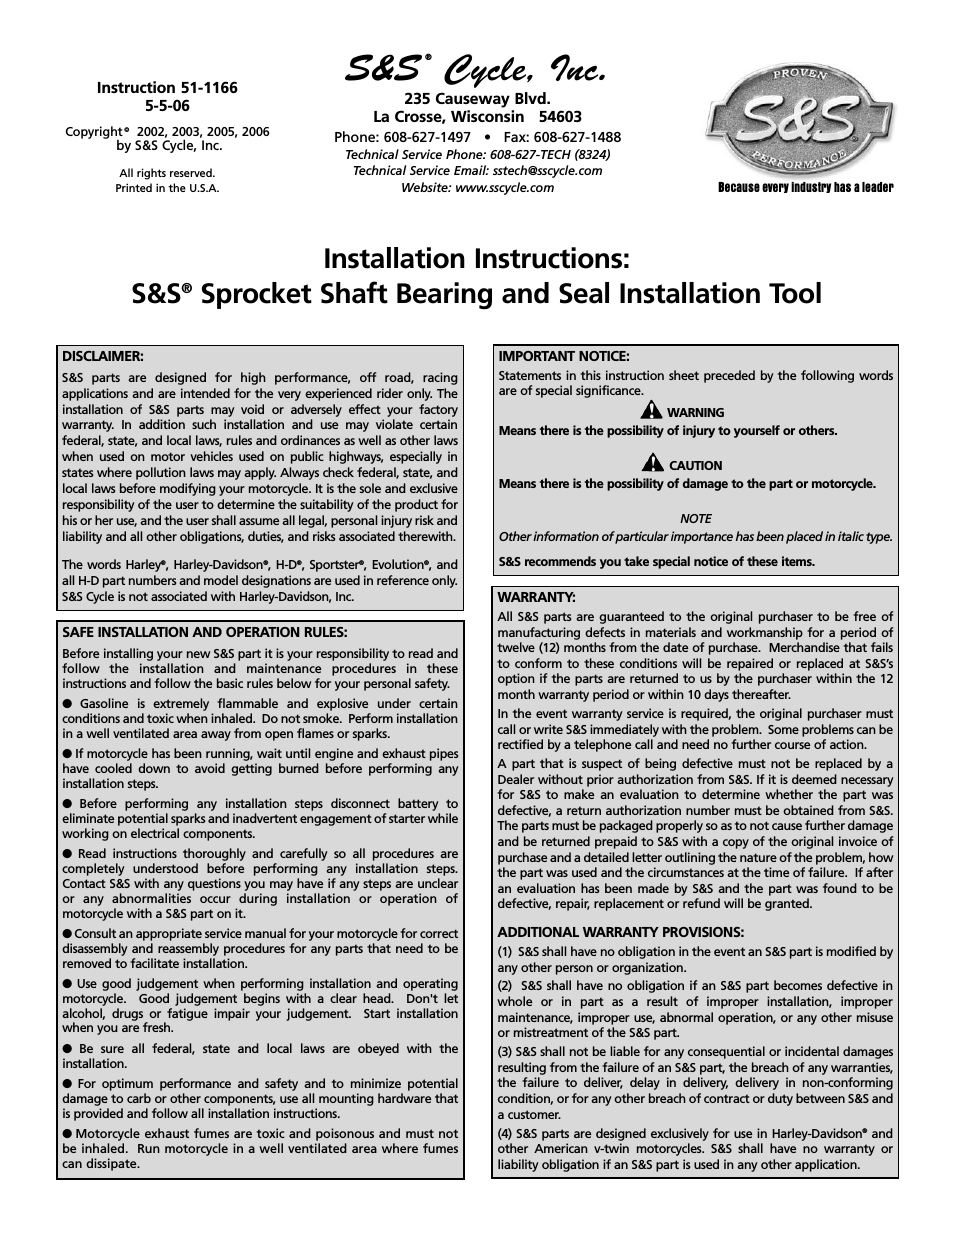 Sprocket Shaft Bearing and Seal Installation Tool